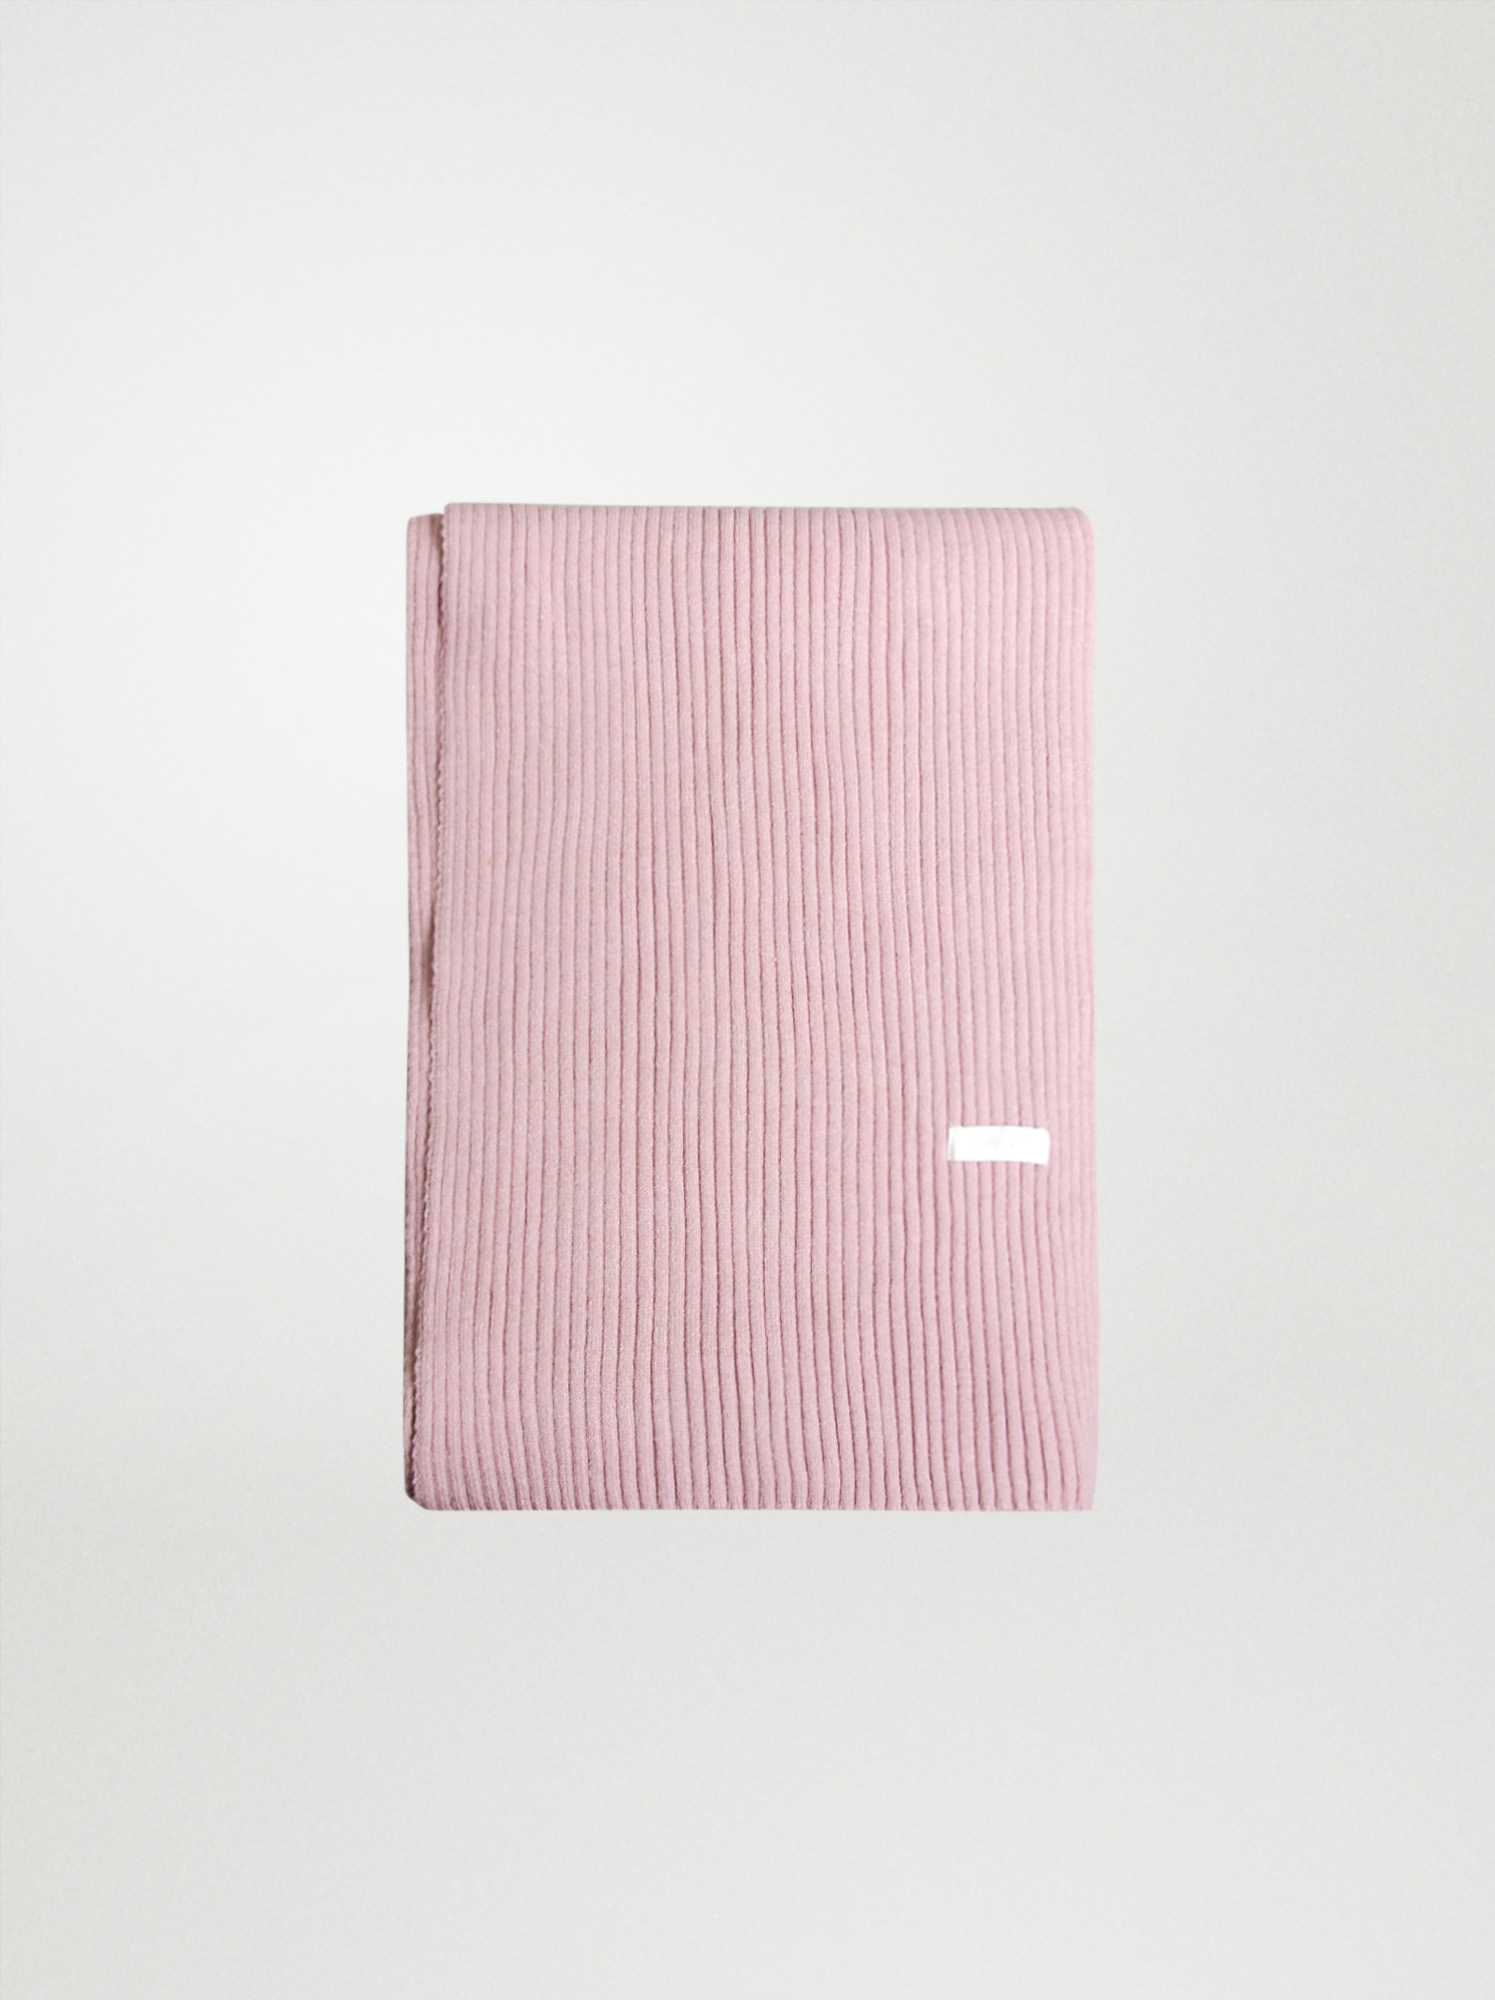 Pink scarf - Allora image 4